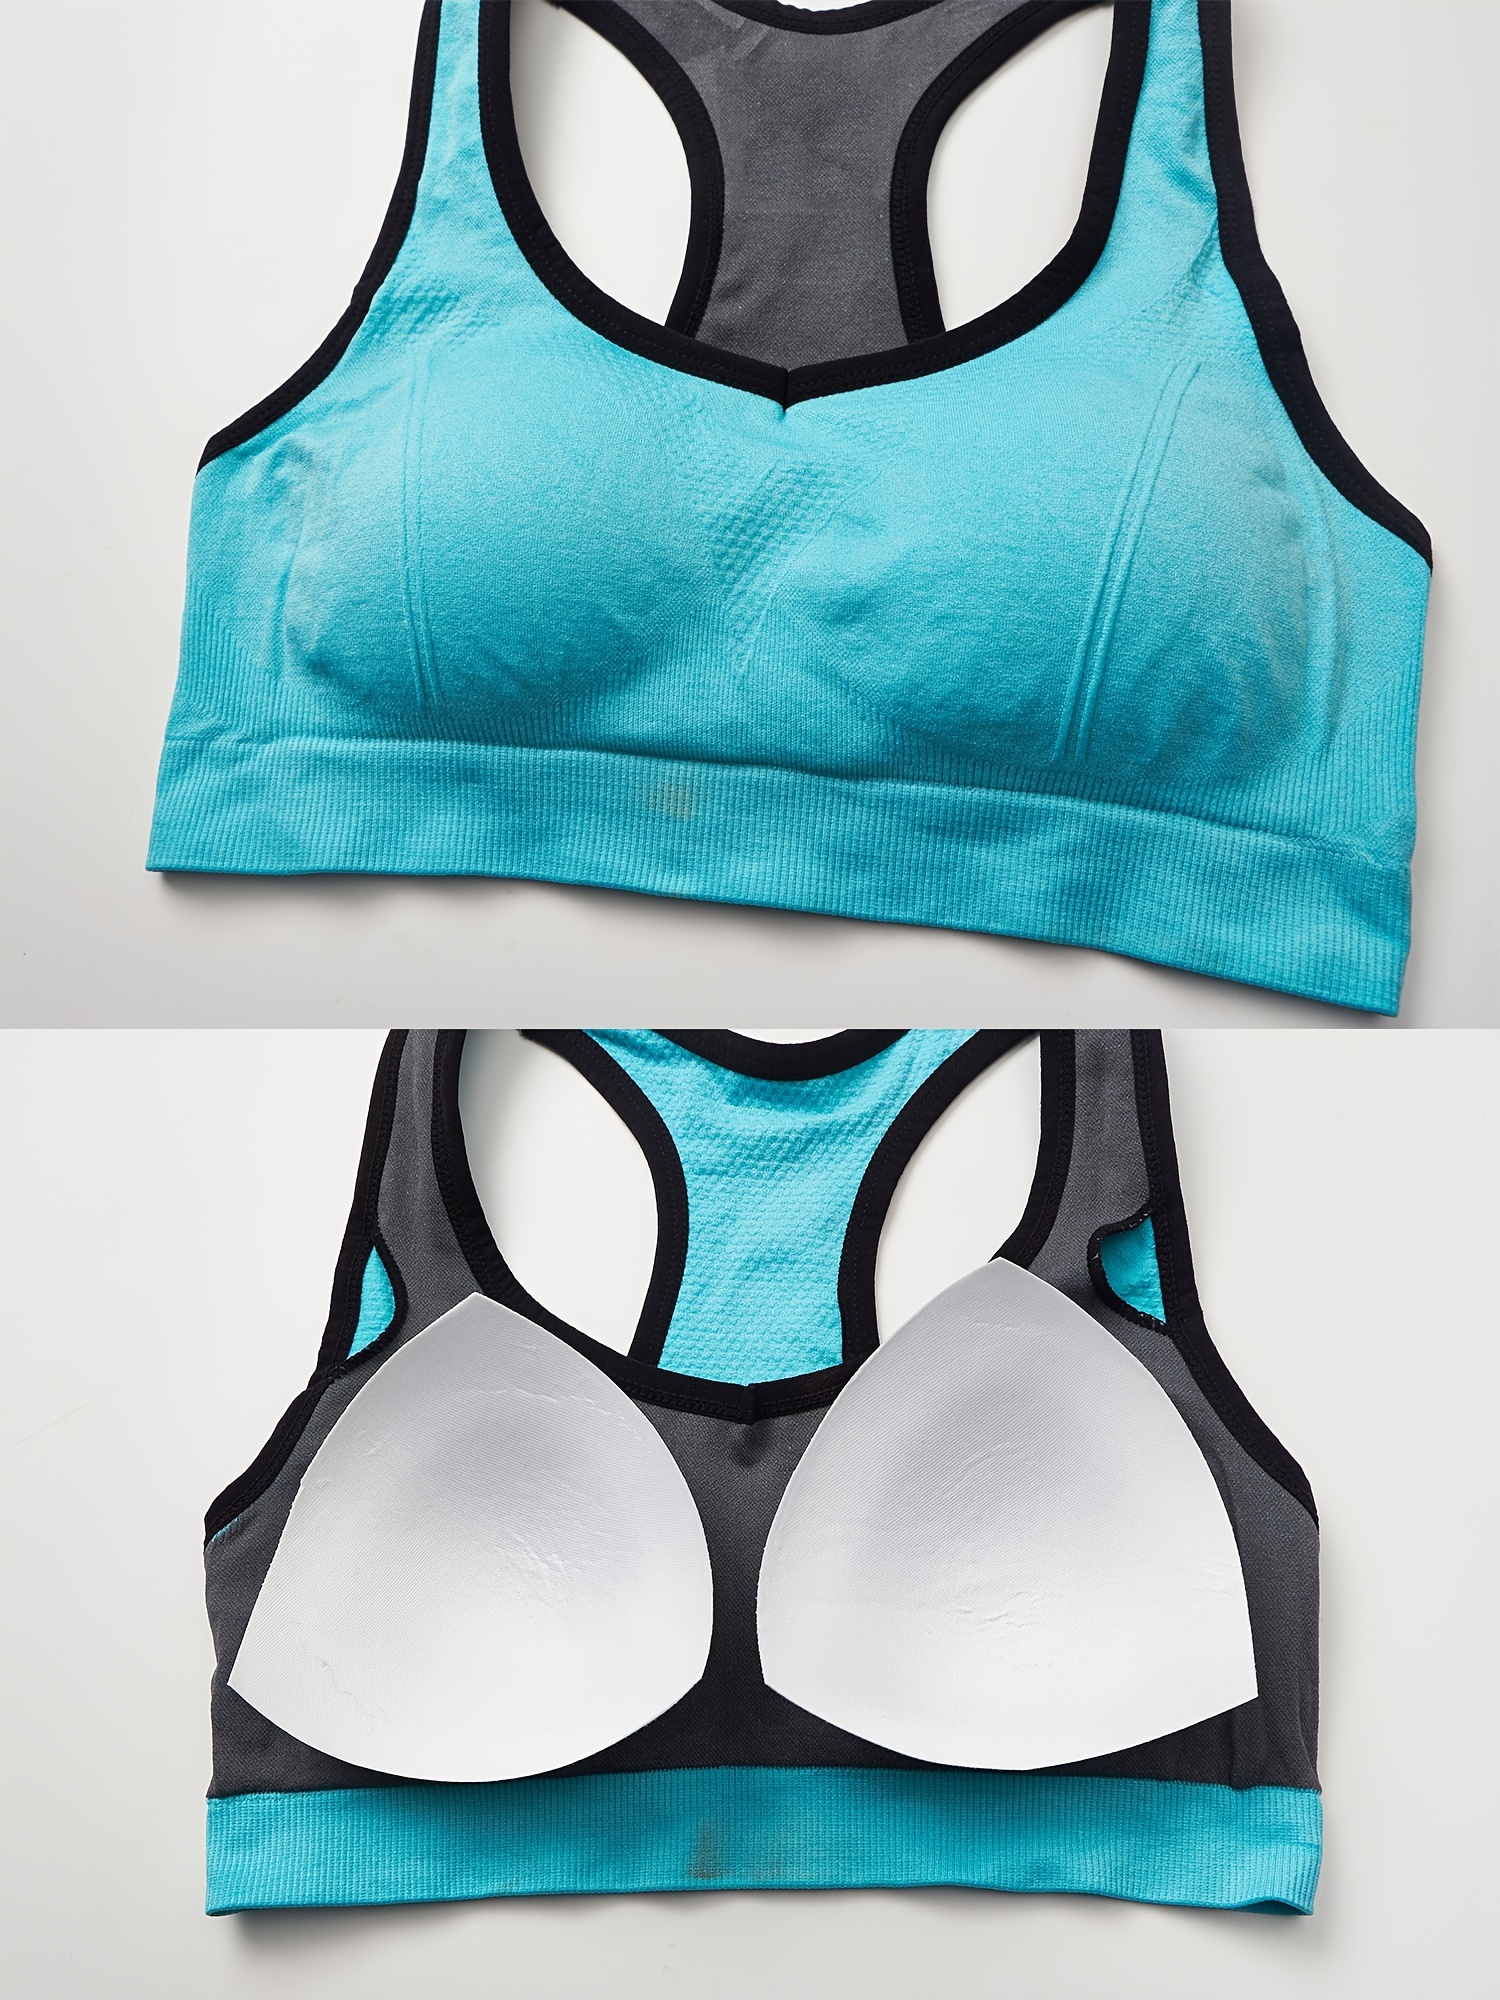 Womens Sports Bra ( XL Size ), 3 Pack Seamless Padded Racerback High Impact Bra  Support Yoga Bras Gym Running Workout, Blue, Gray, Black 